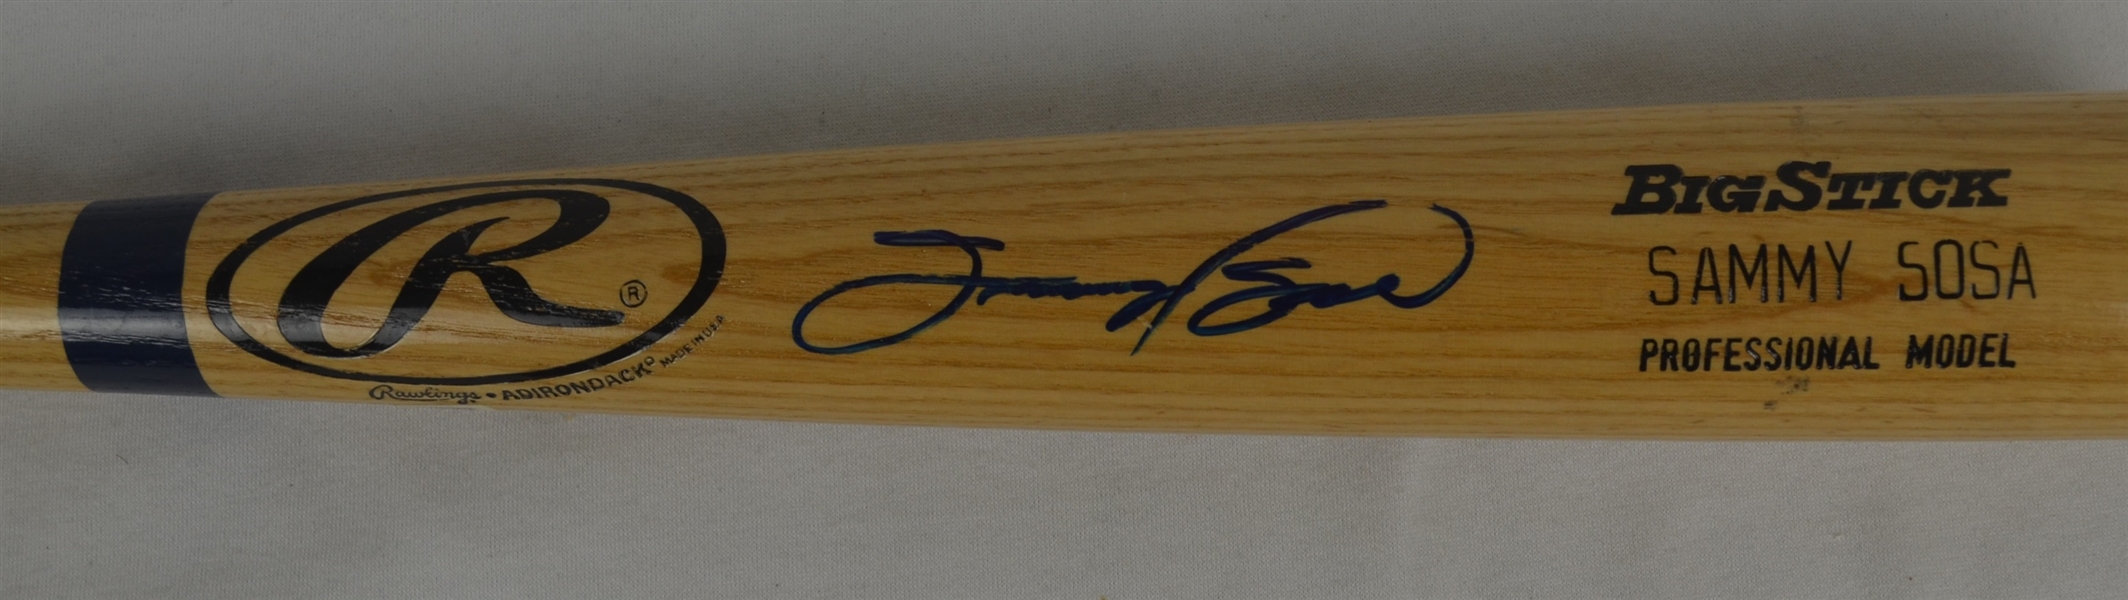 Sammy Sosa Chicago Cubs Autographed Bat